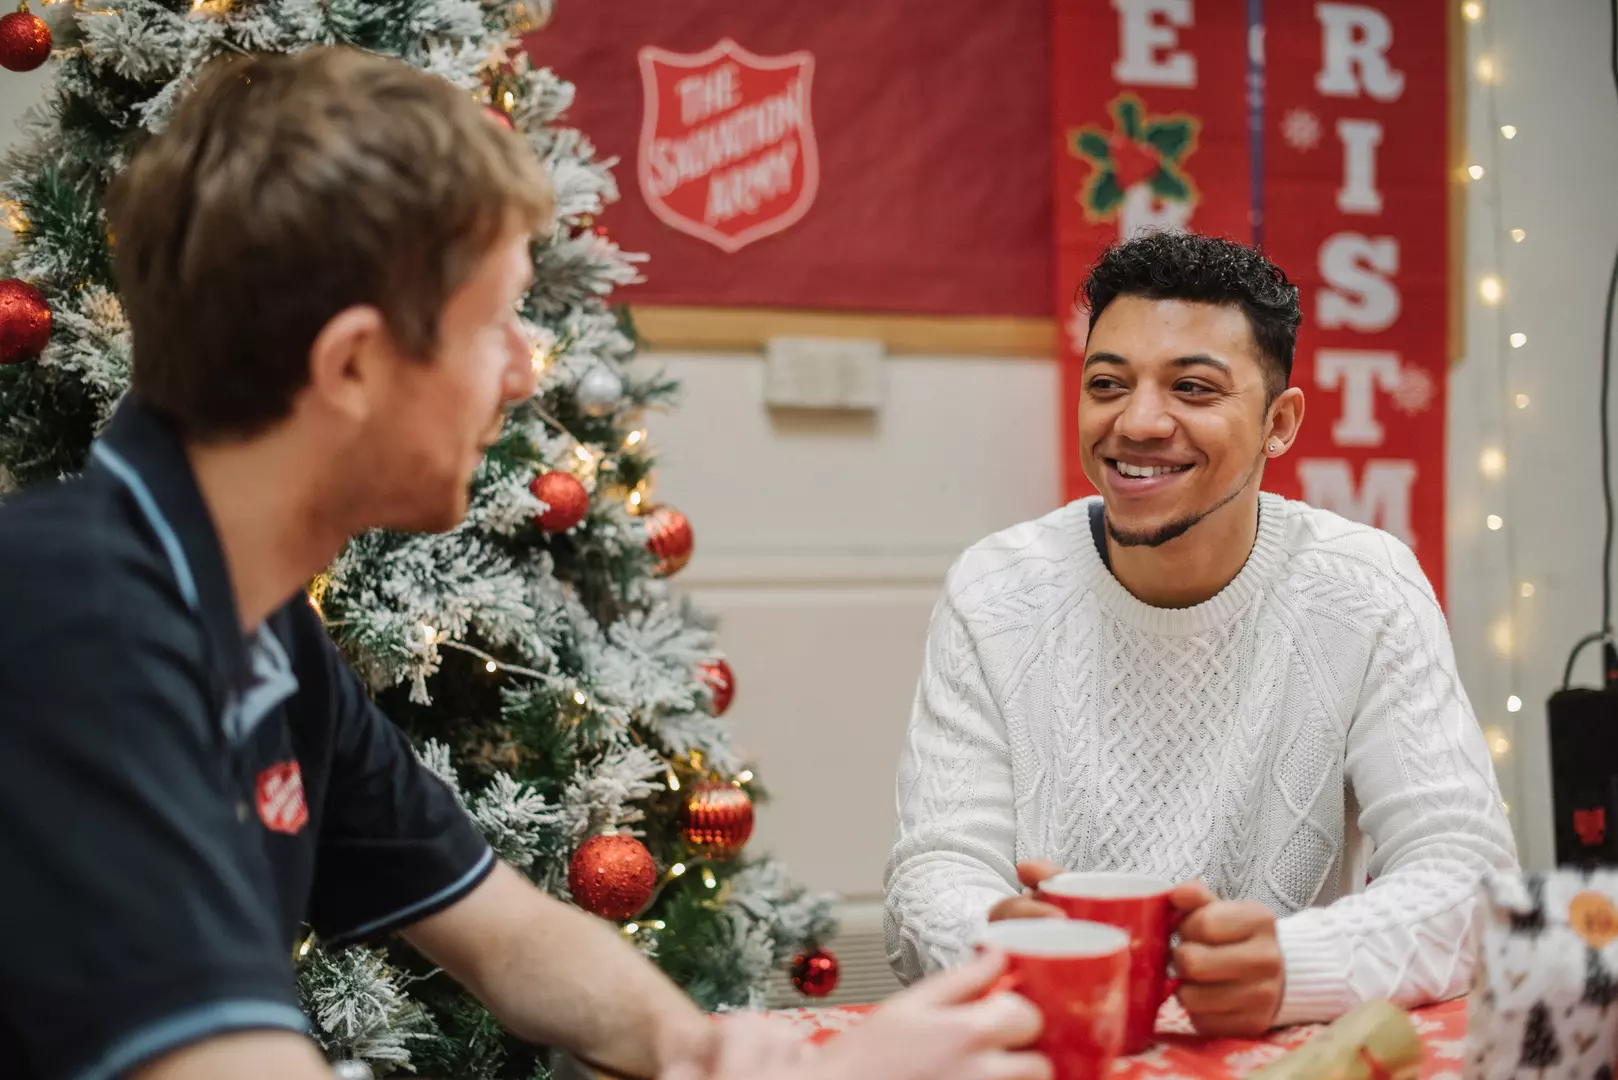 A Christmas scene at a Salvation Army church